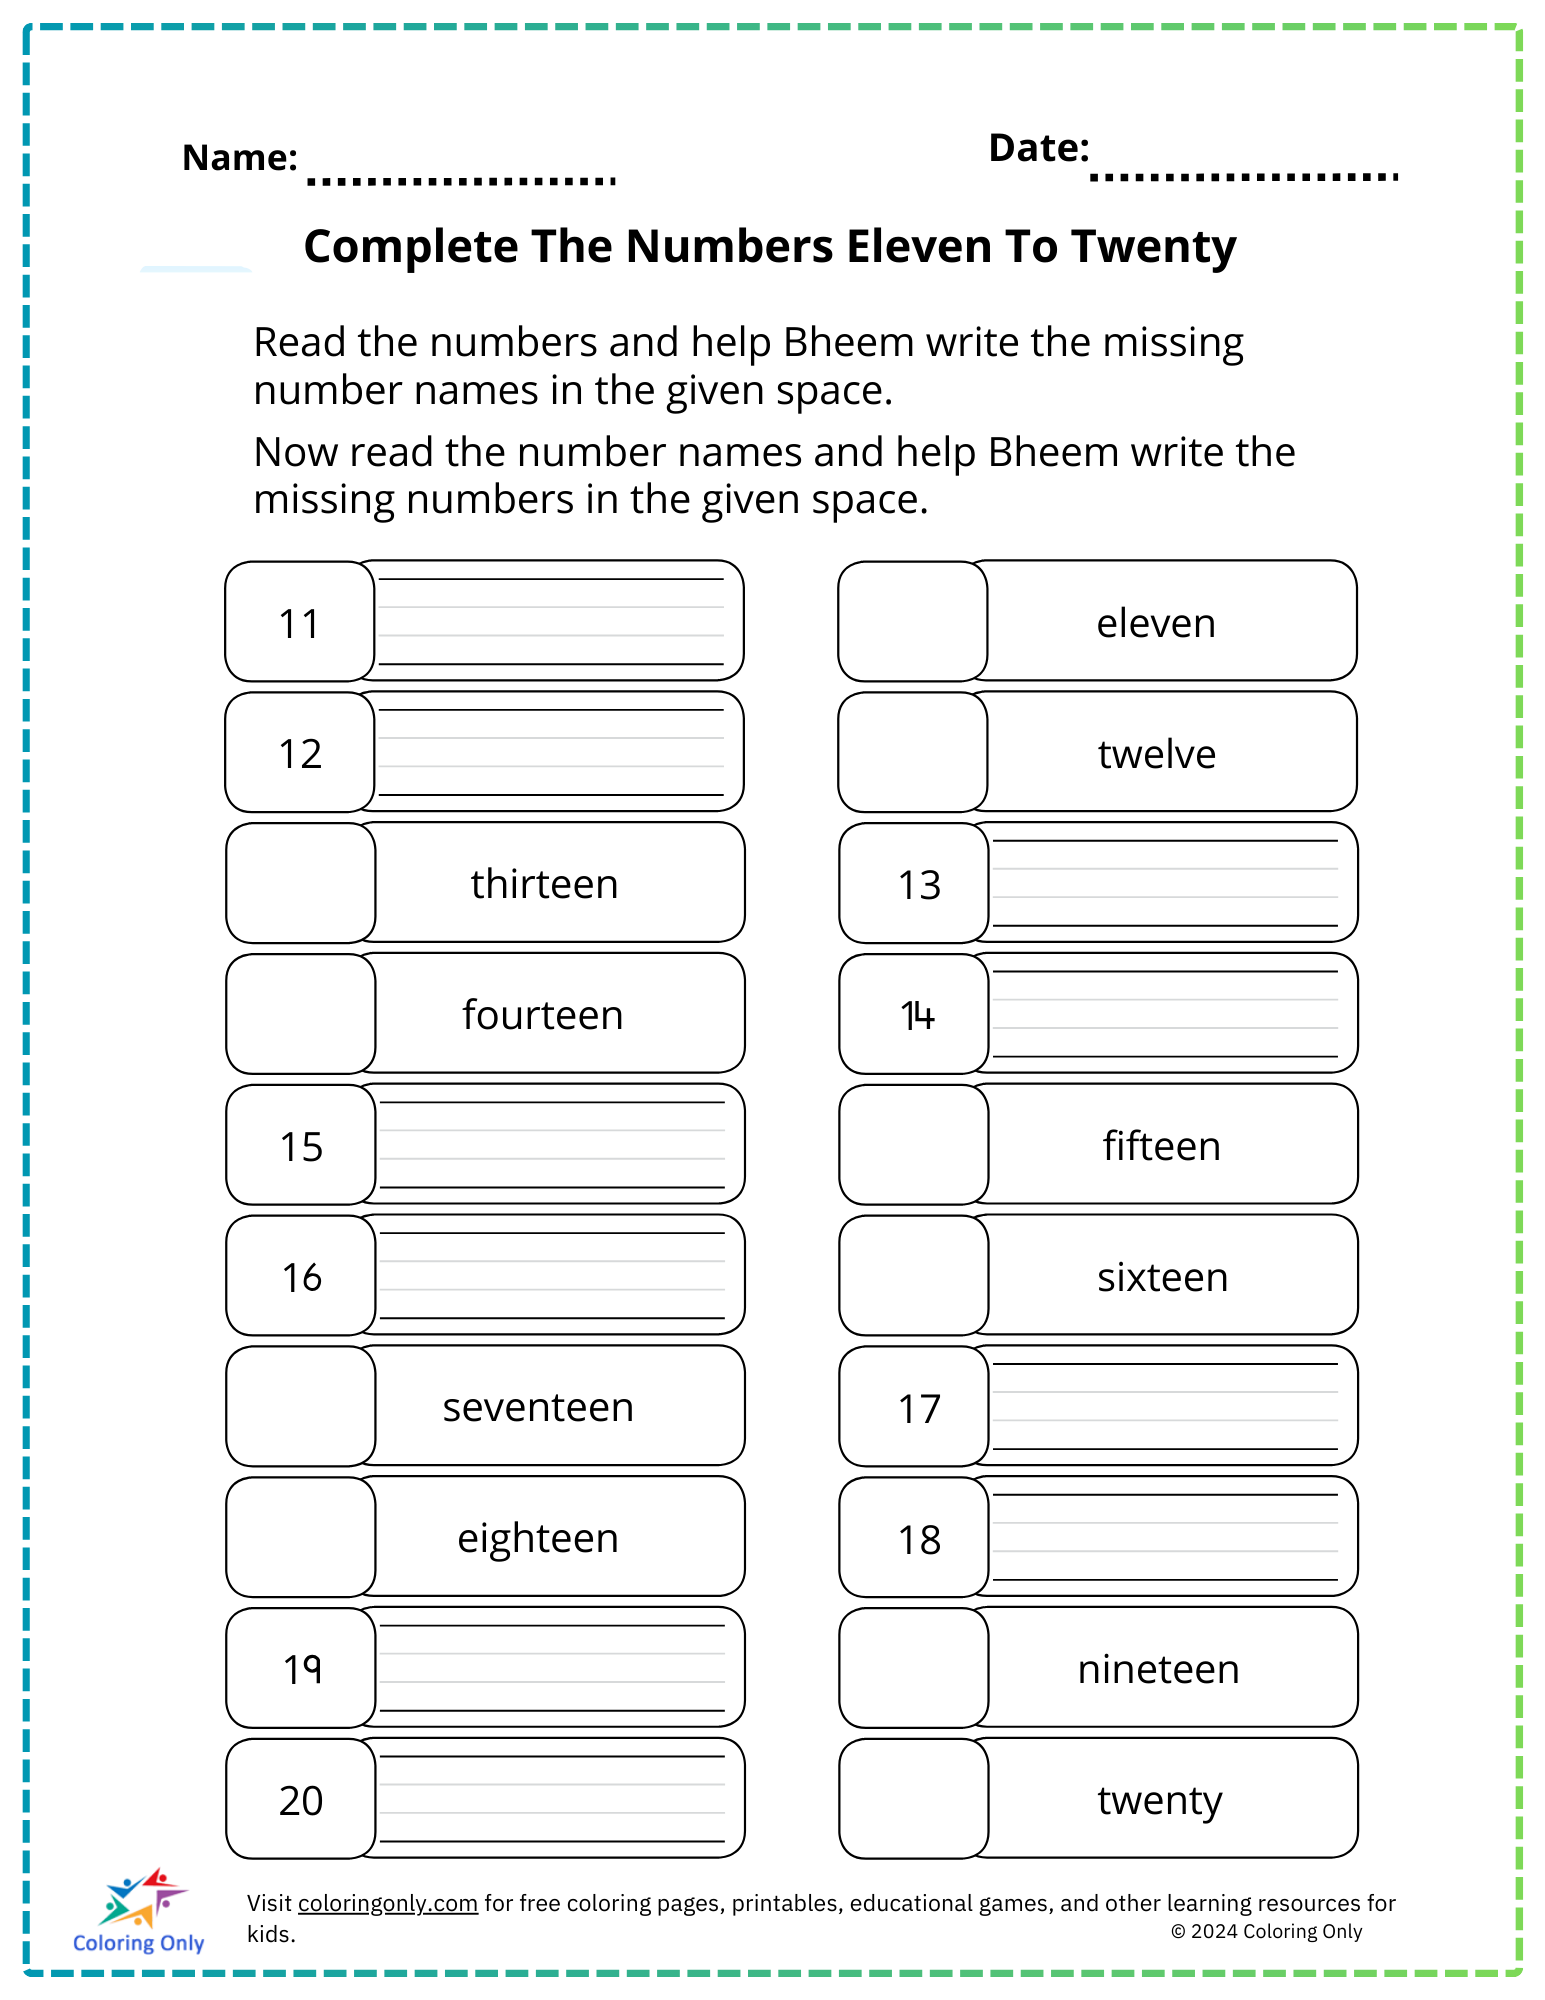 Complete The Numbers Eleven To Twenty Free Printable Worksheet